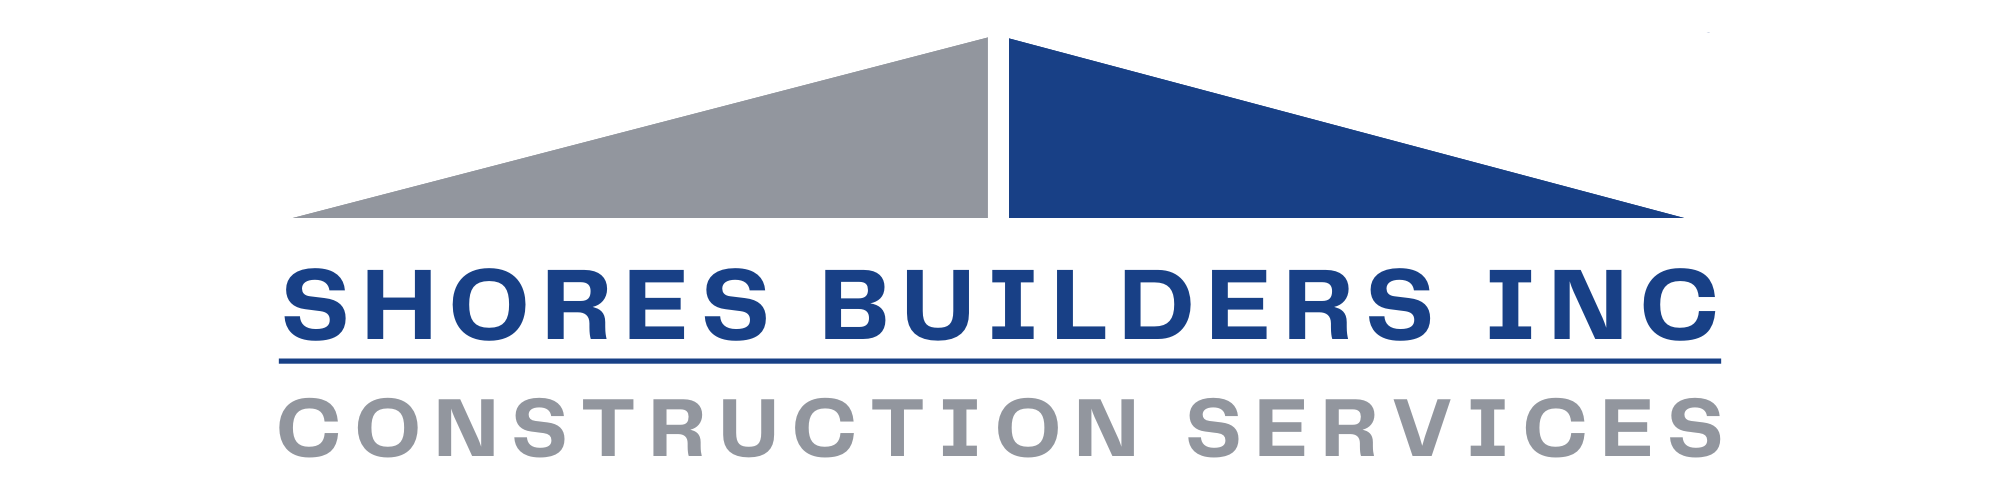 Shores Builders Inc.